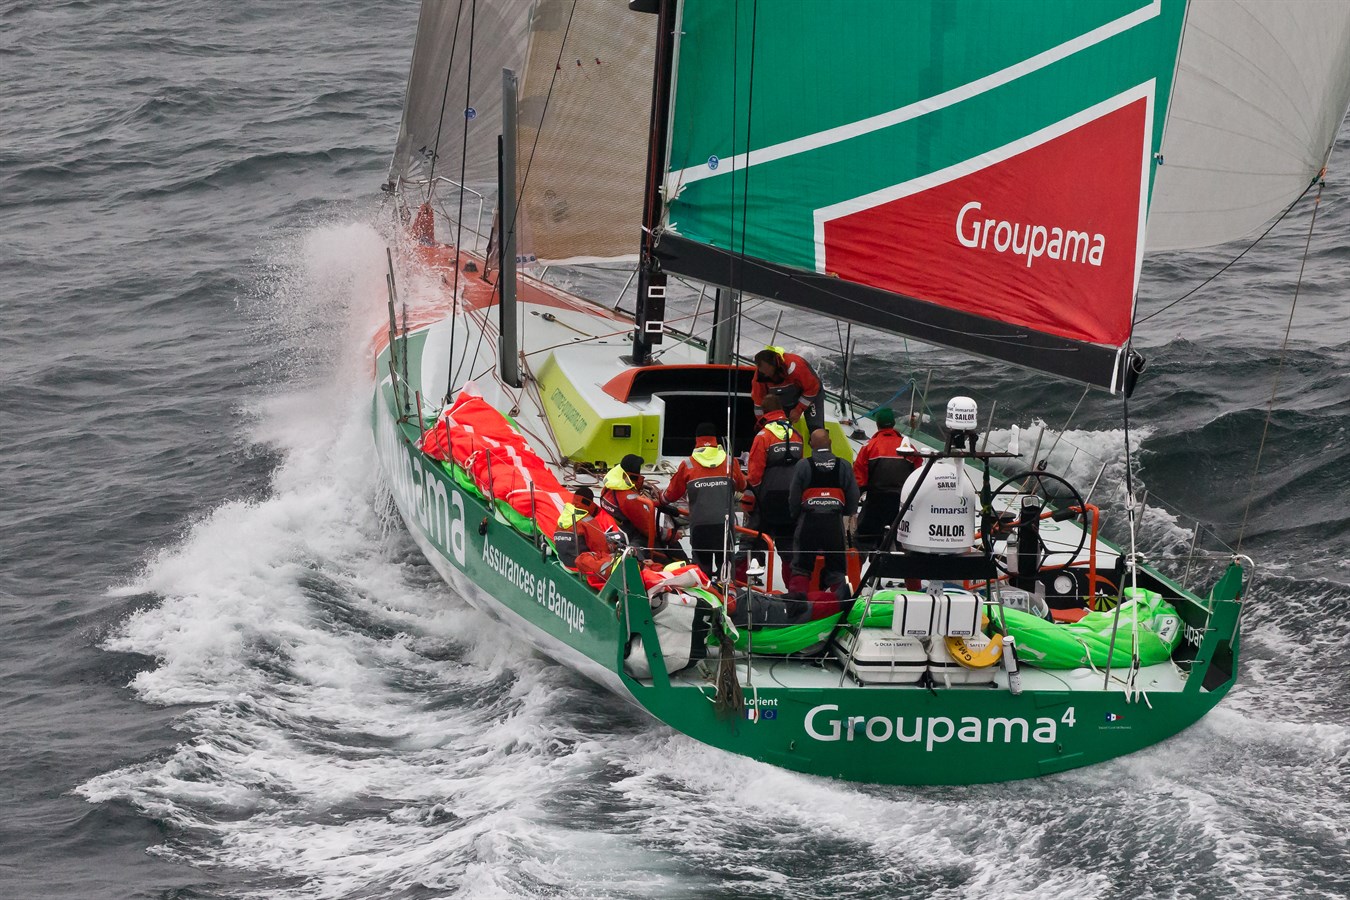 Groupama Sailing Team, training for the Volvo Ocean Race 2011-2012